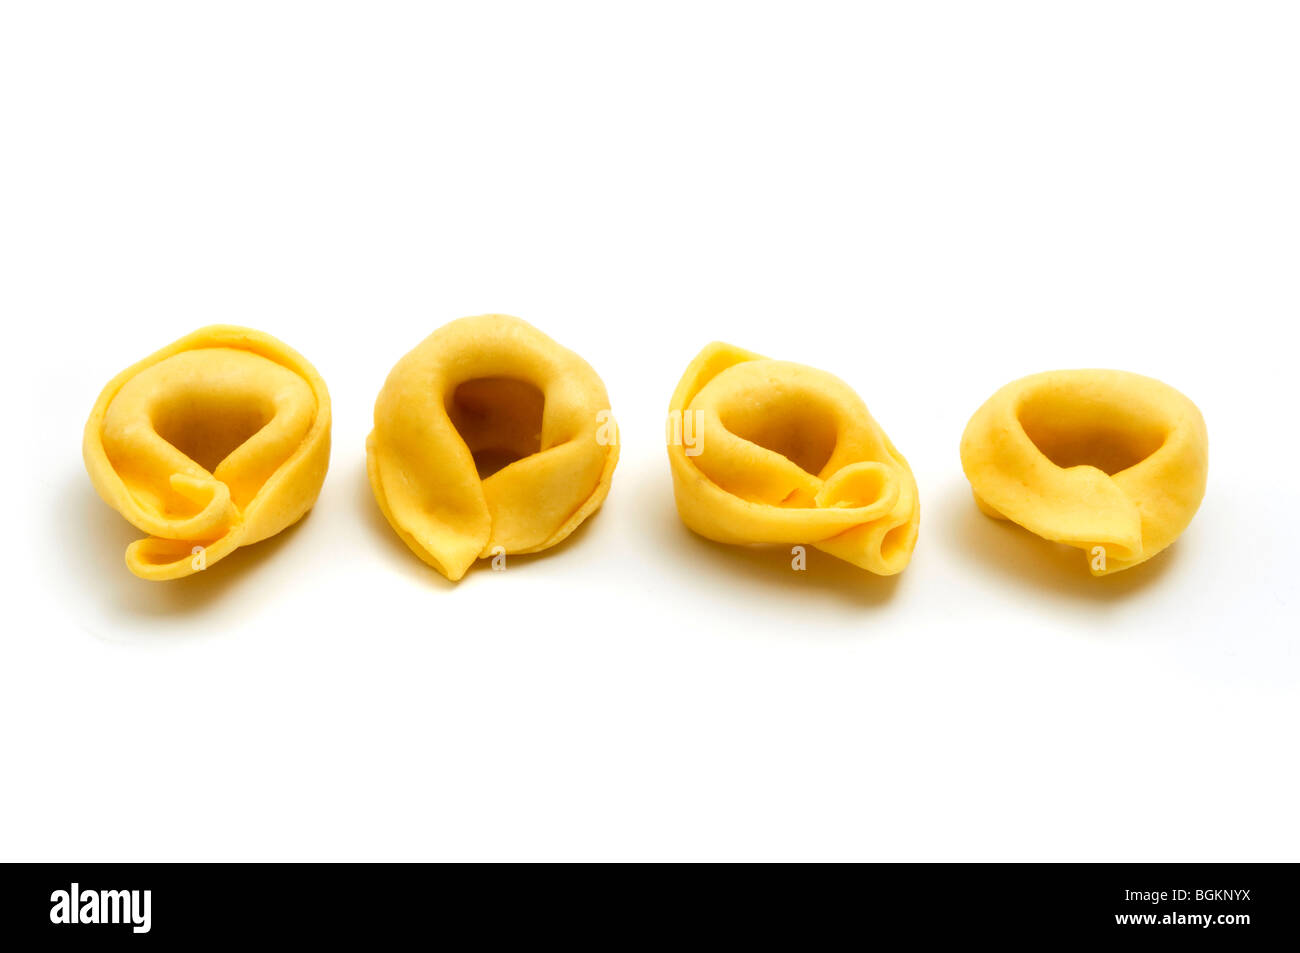 Tortellini (ring-shaped pasta) on a white background Stock Photo